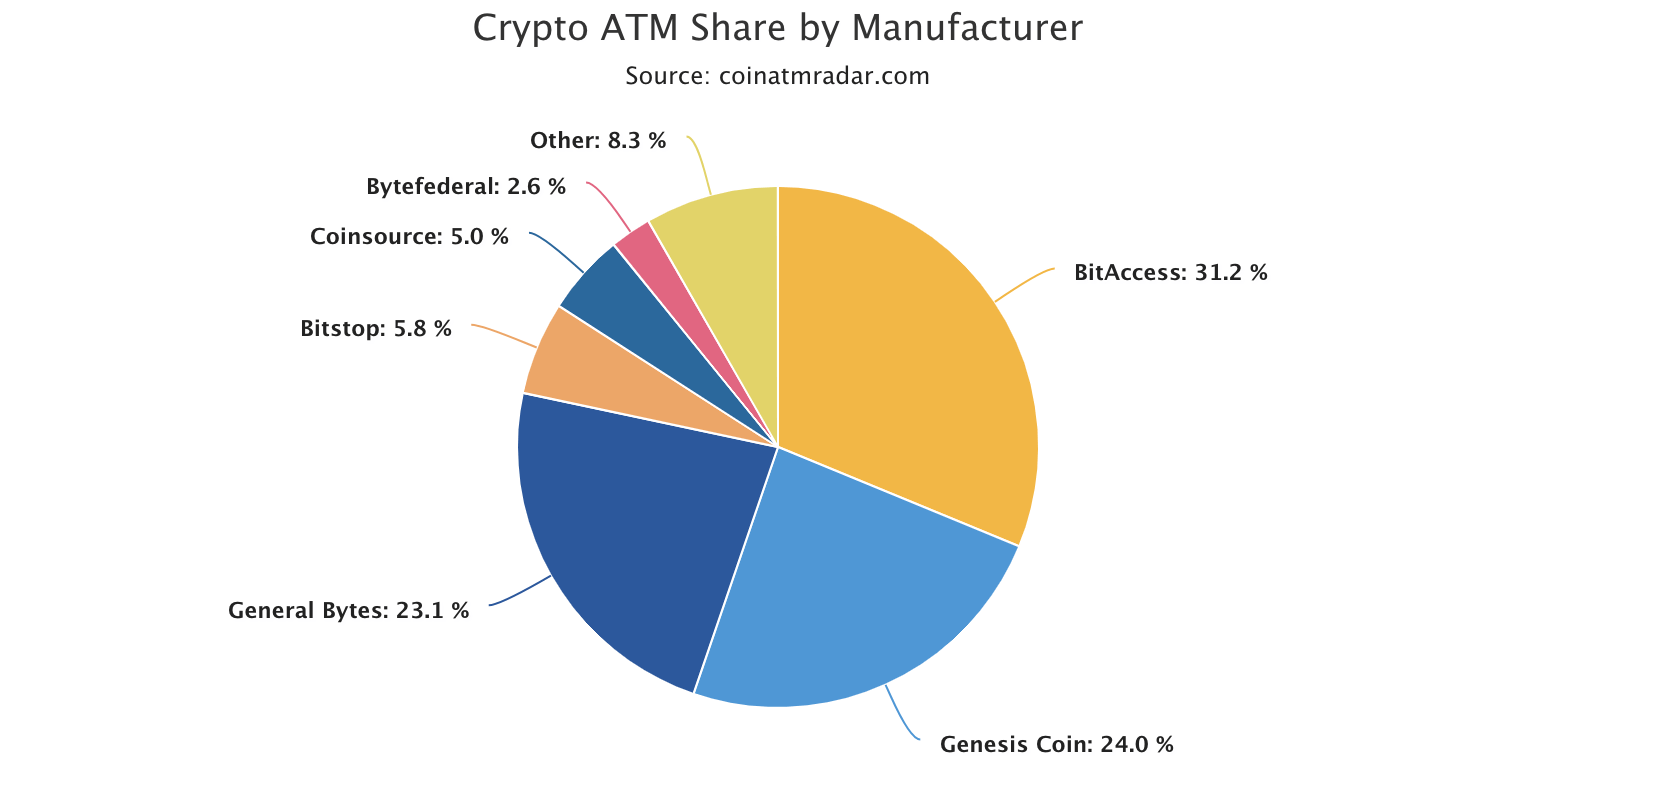 Principaux entreprises produisant des ATM crypto / Bitcoin